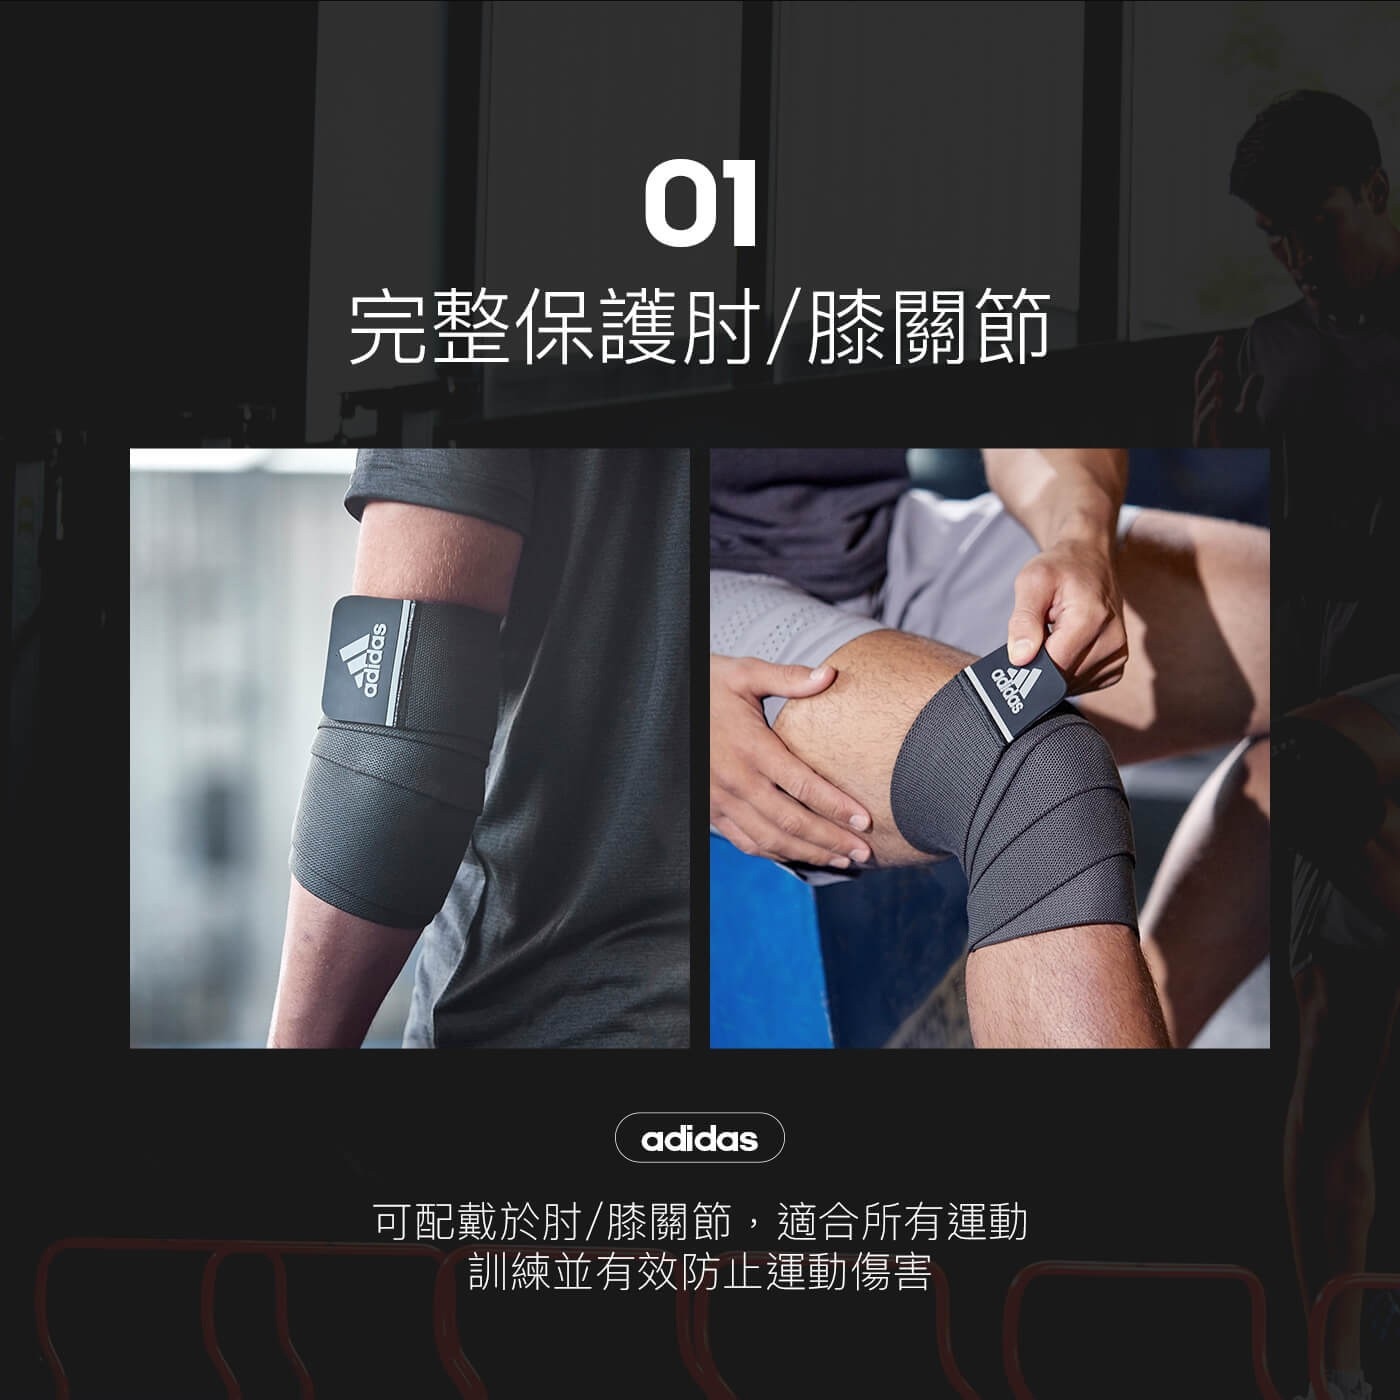 Adidas 彈力纏繞式訓練護帶完整保護肘膝關節